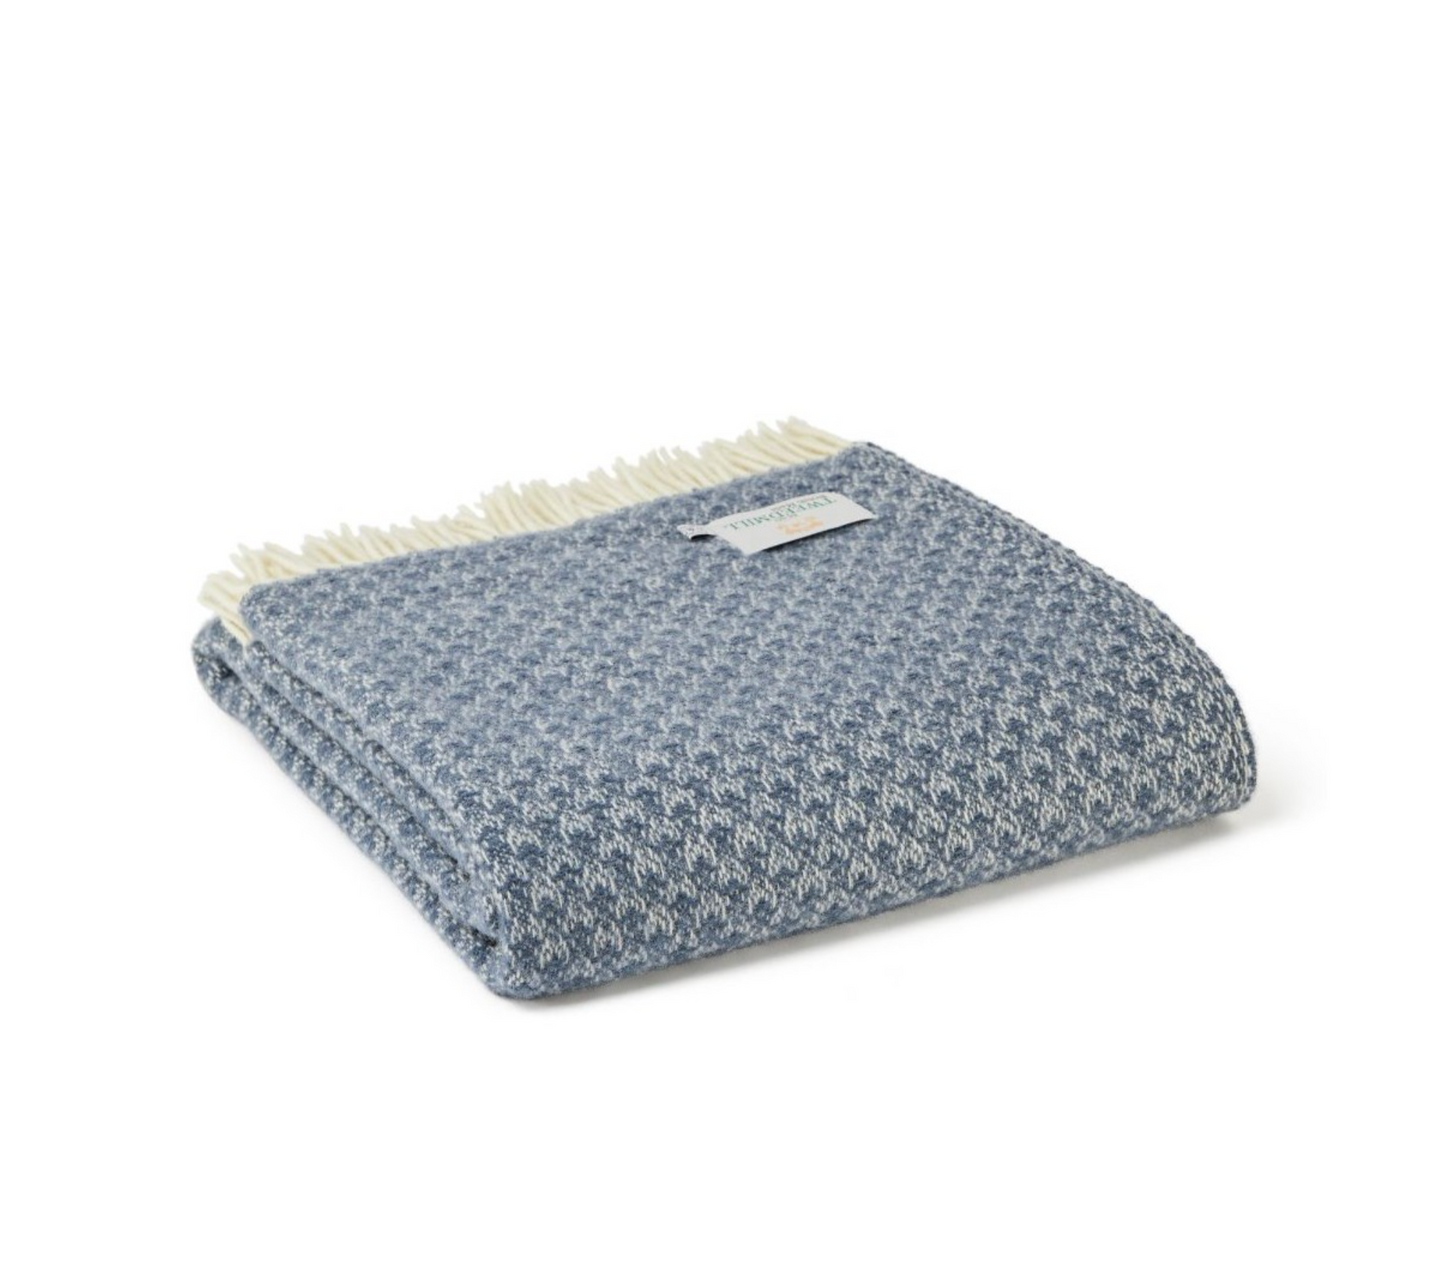 Tweedmill Isobel Crescent Pure New Wool Throw, Blue Slate